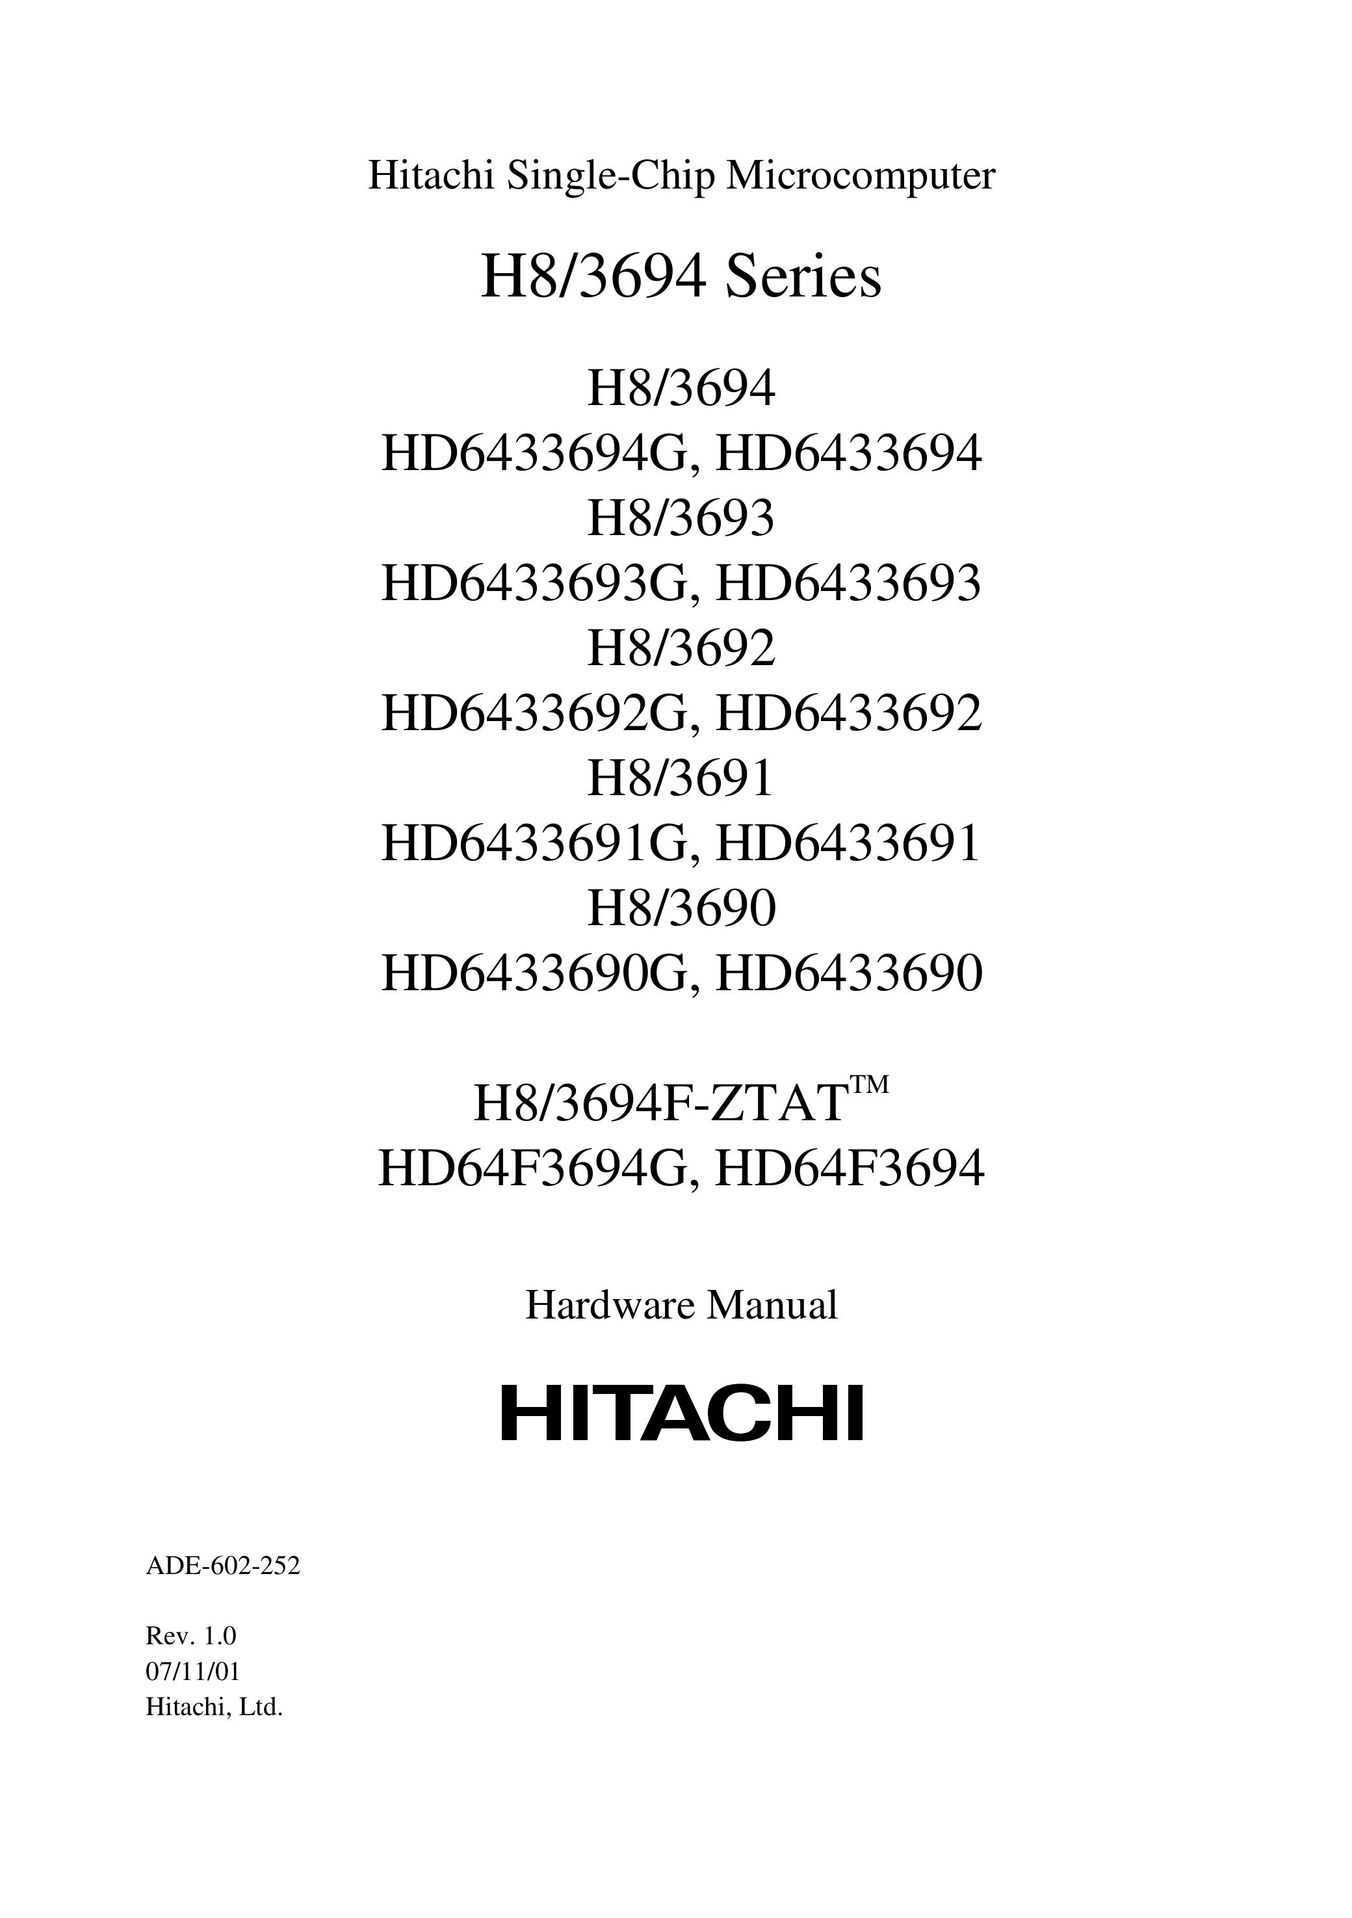 Hitachi HD64F3694G TV Mount User Manual